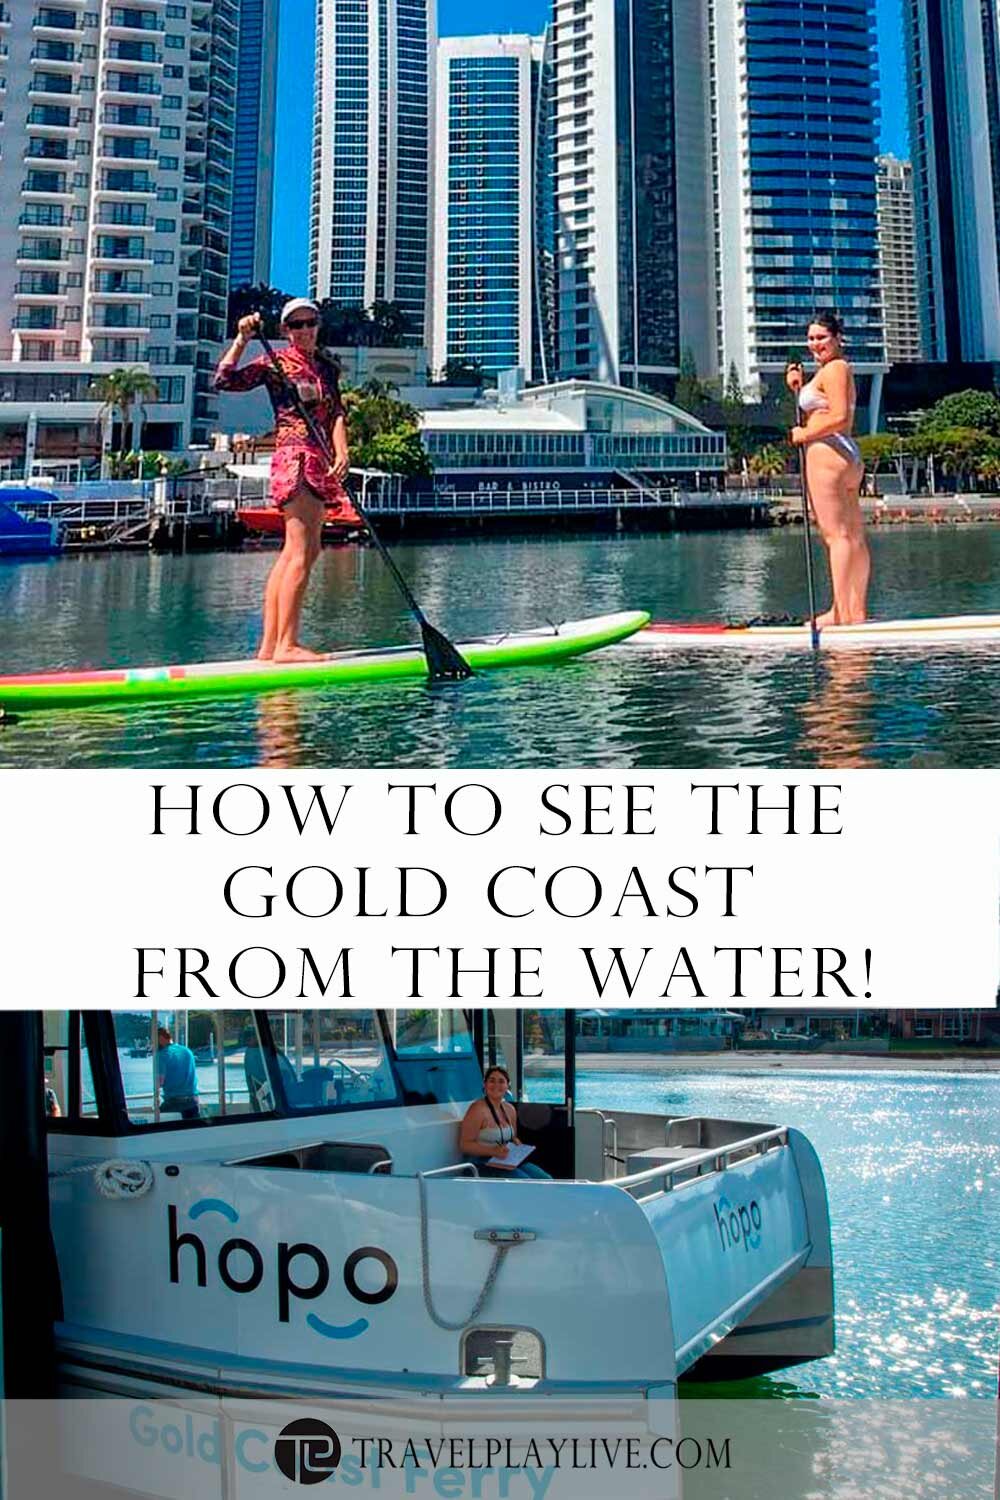 Gold-Coast-by-water2.jpg